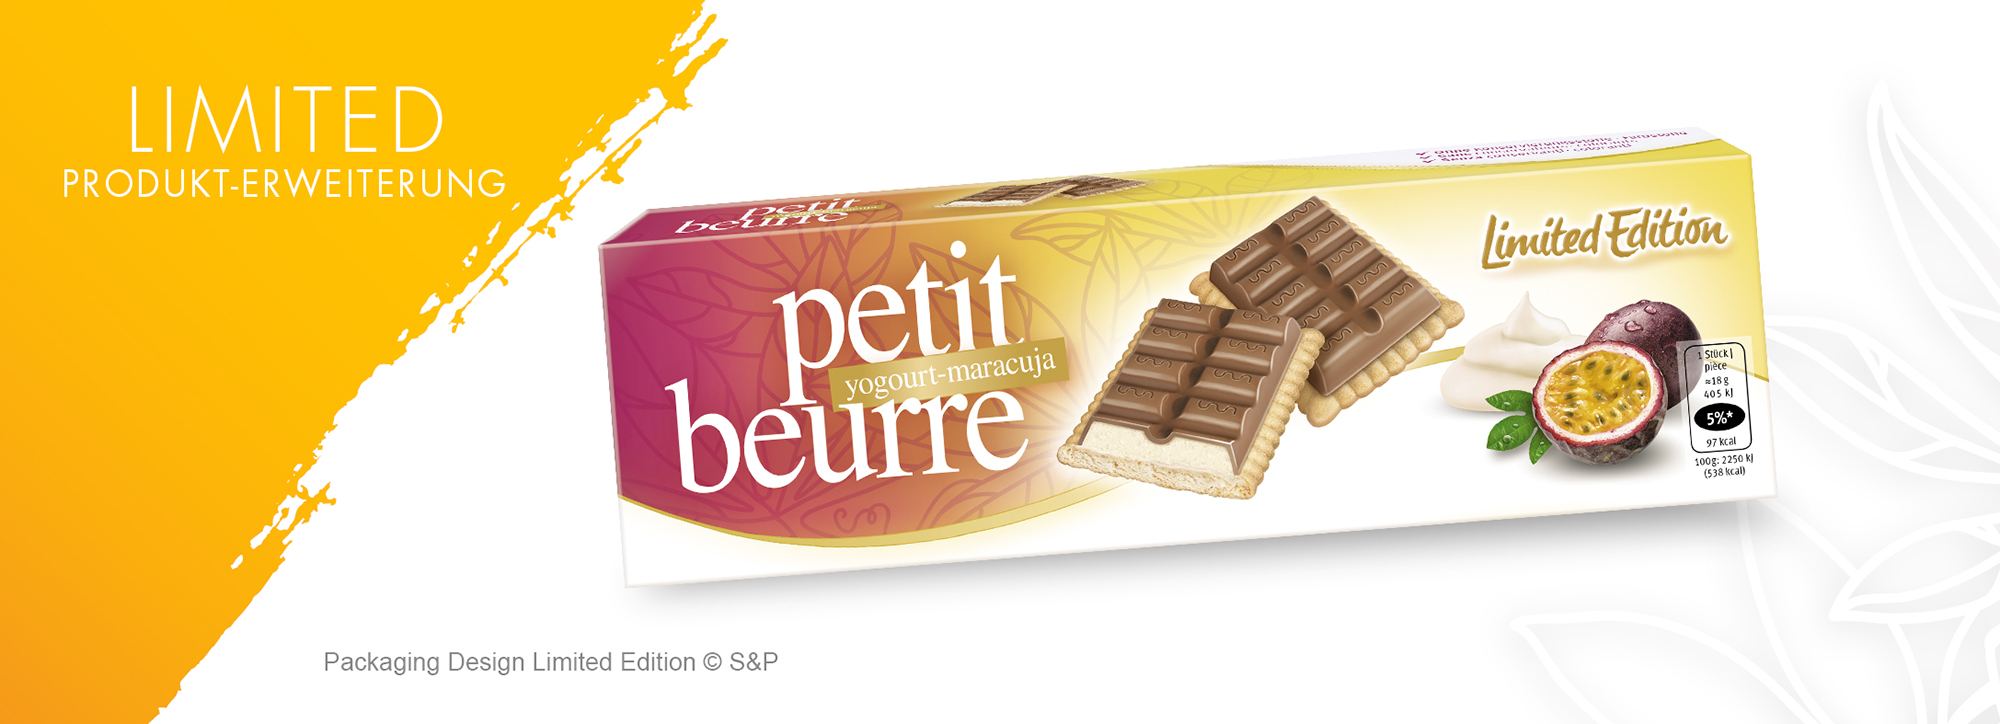 Petit Beurre Maracuja, Verpackungsdesign für die Limited Edition